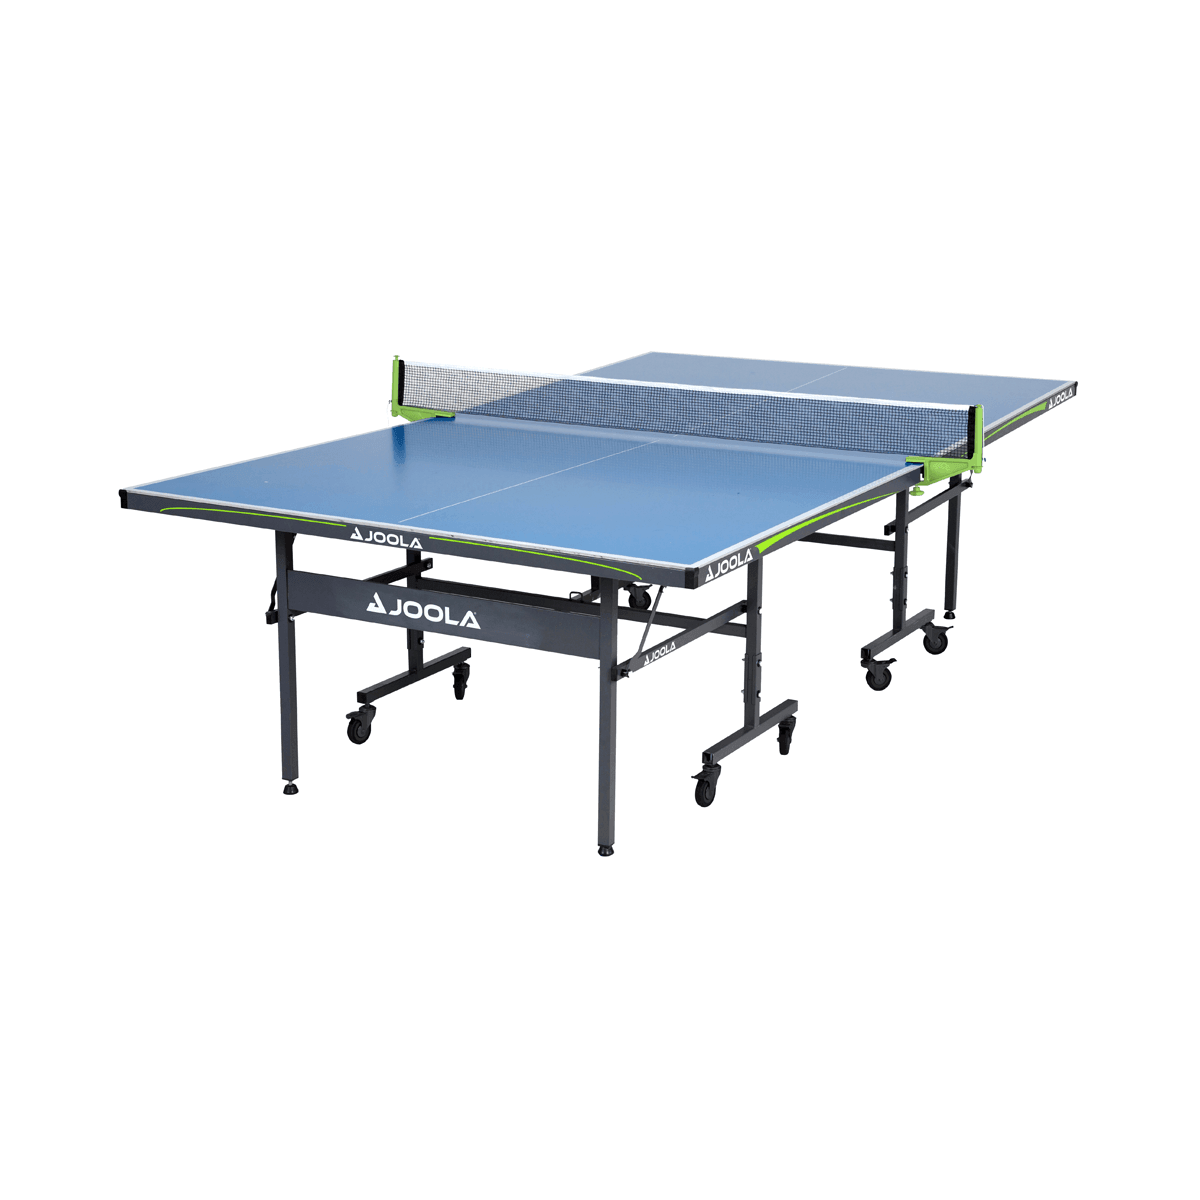 JOOLA Outdoor Ping Pong Folding Waterproof Blue Tennis Table